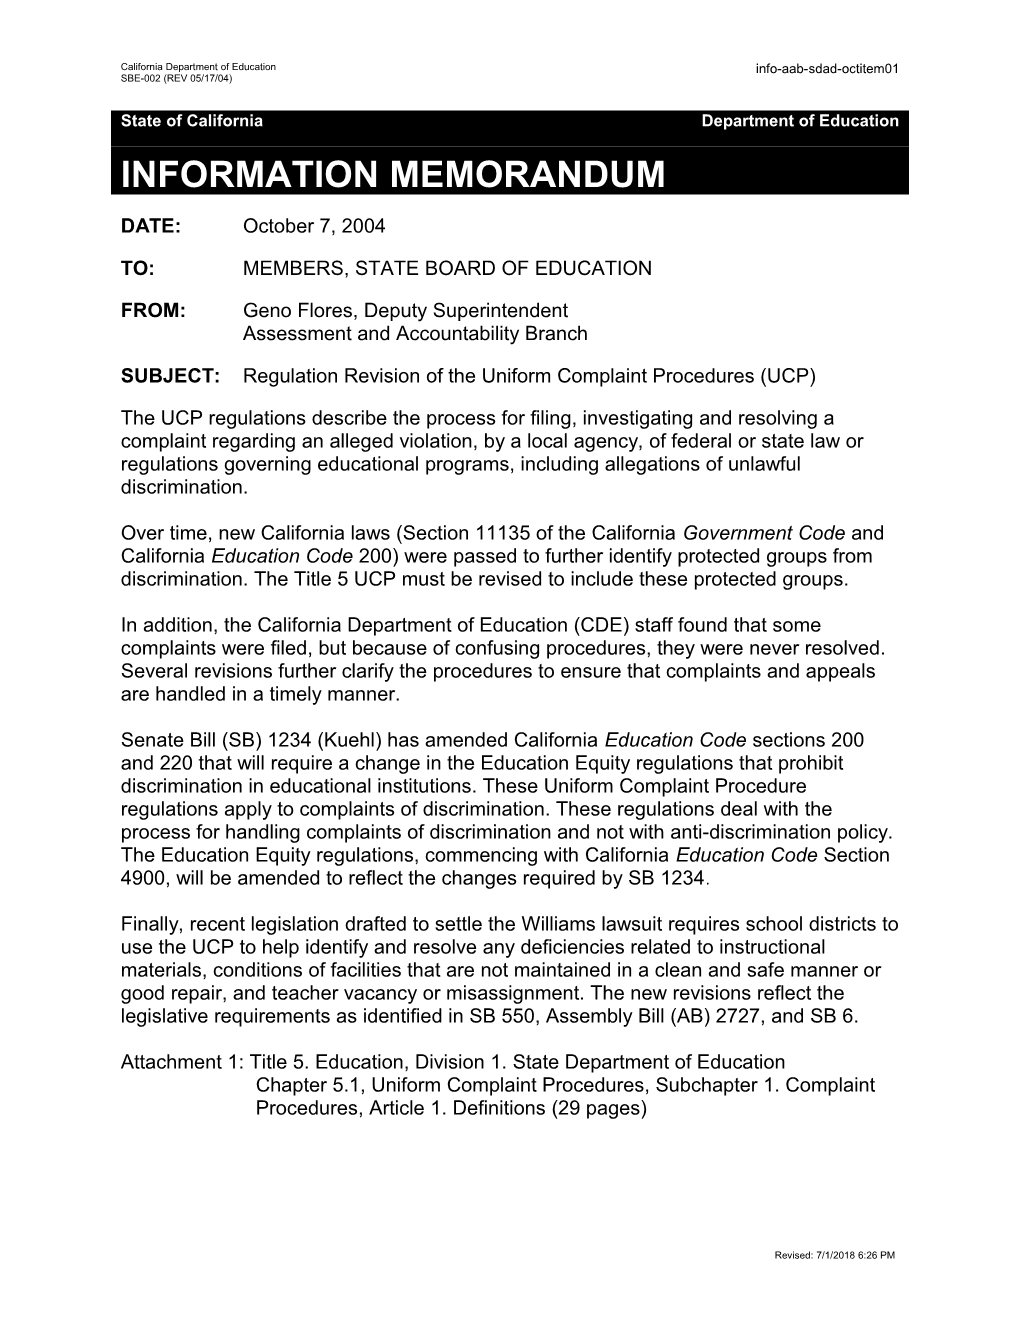 October 2004 SDAD Agenda Item 1 - Information Memorandum (CA State Board of Education)